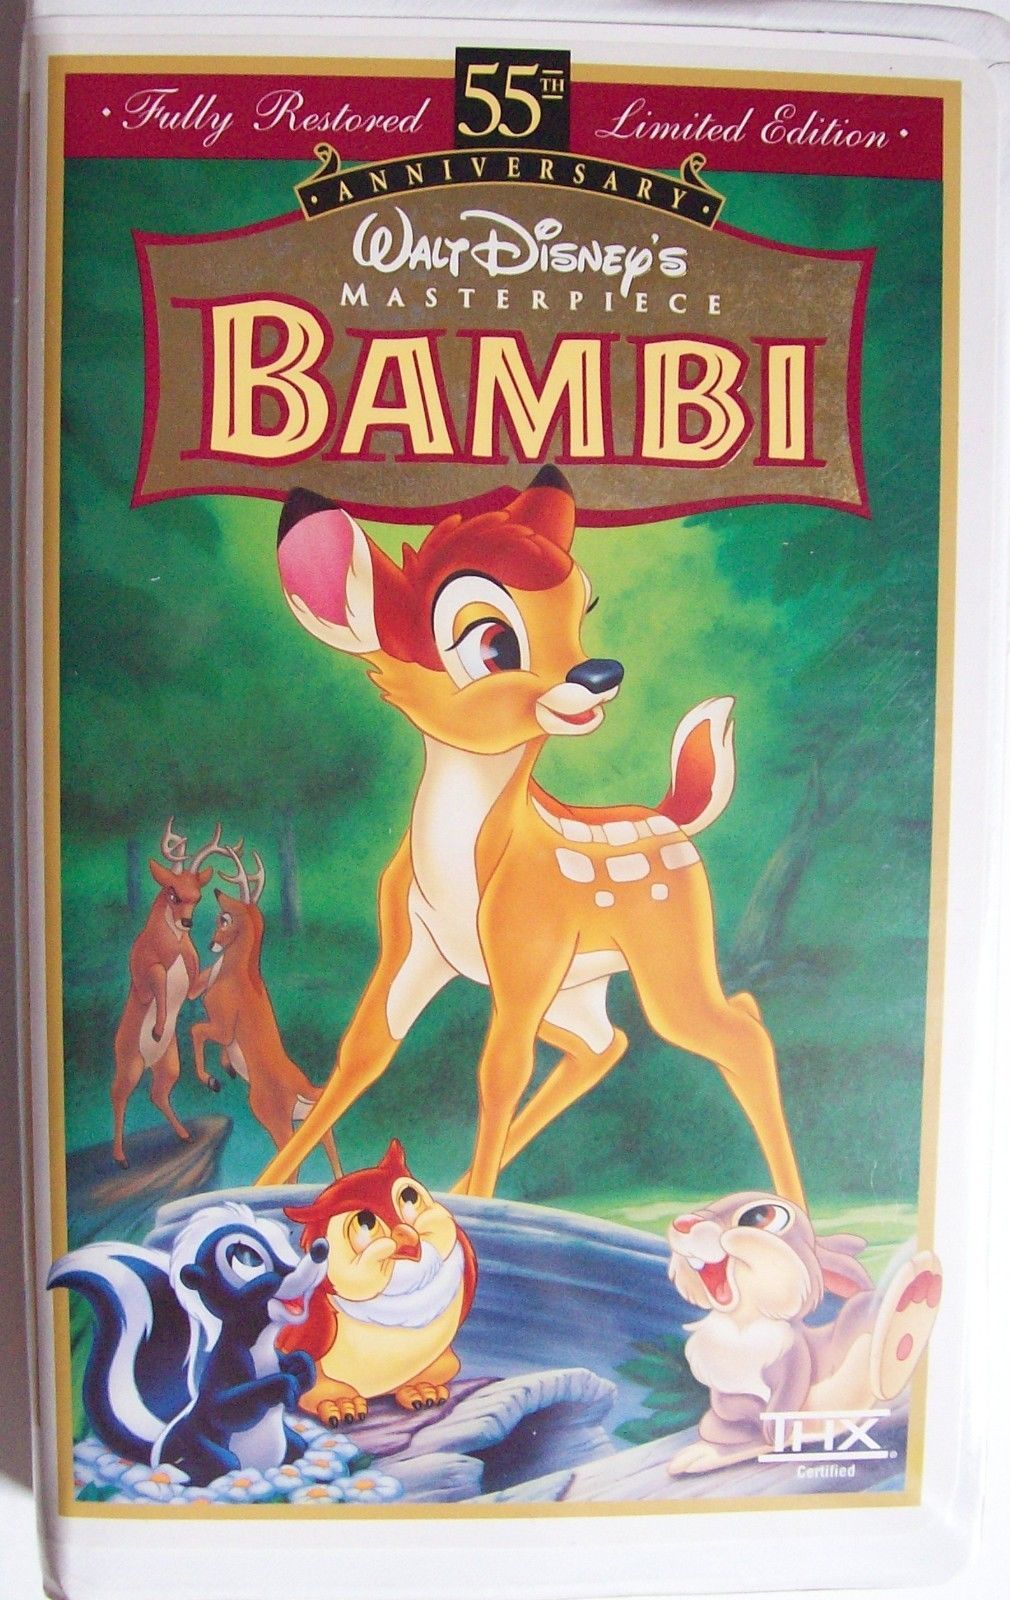 Vhs Walt Disney Bambi Masterpiece Collection Th Anniversary Rare